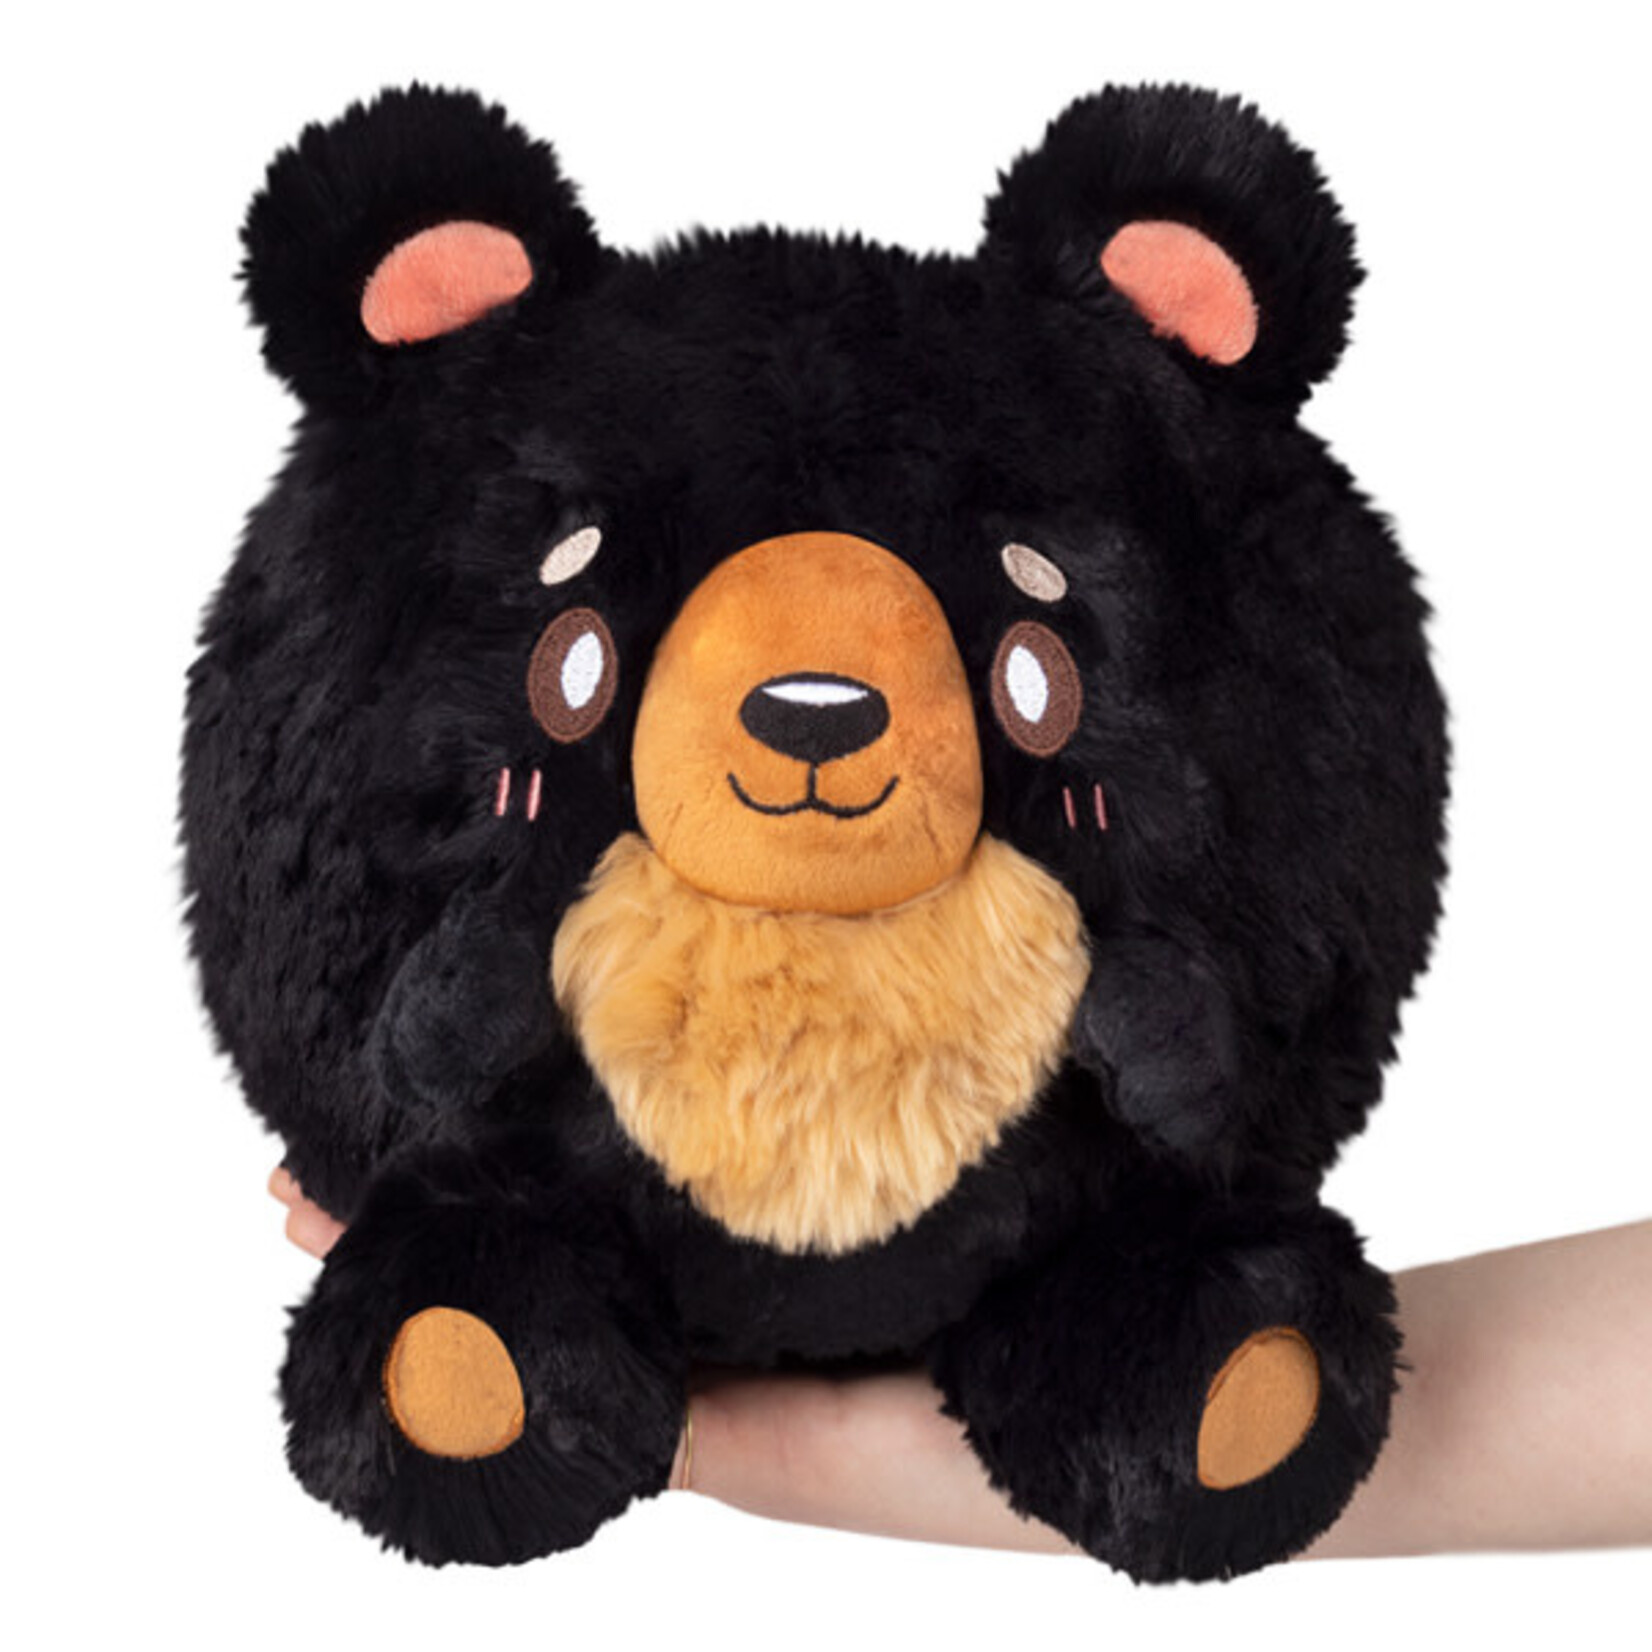 squishable Mini Black Bear Squishable 8"